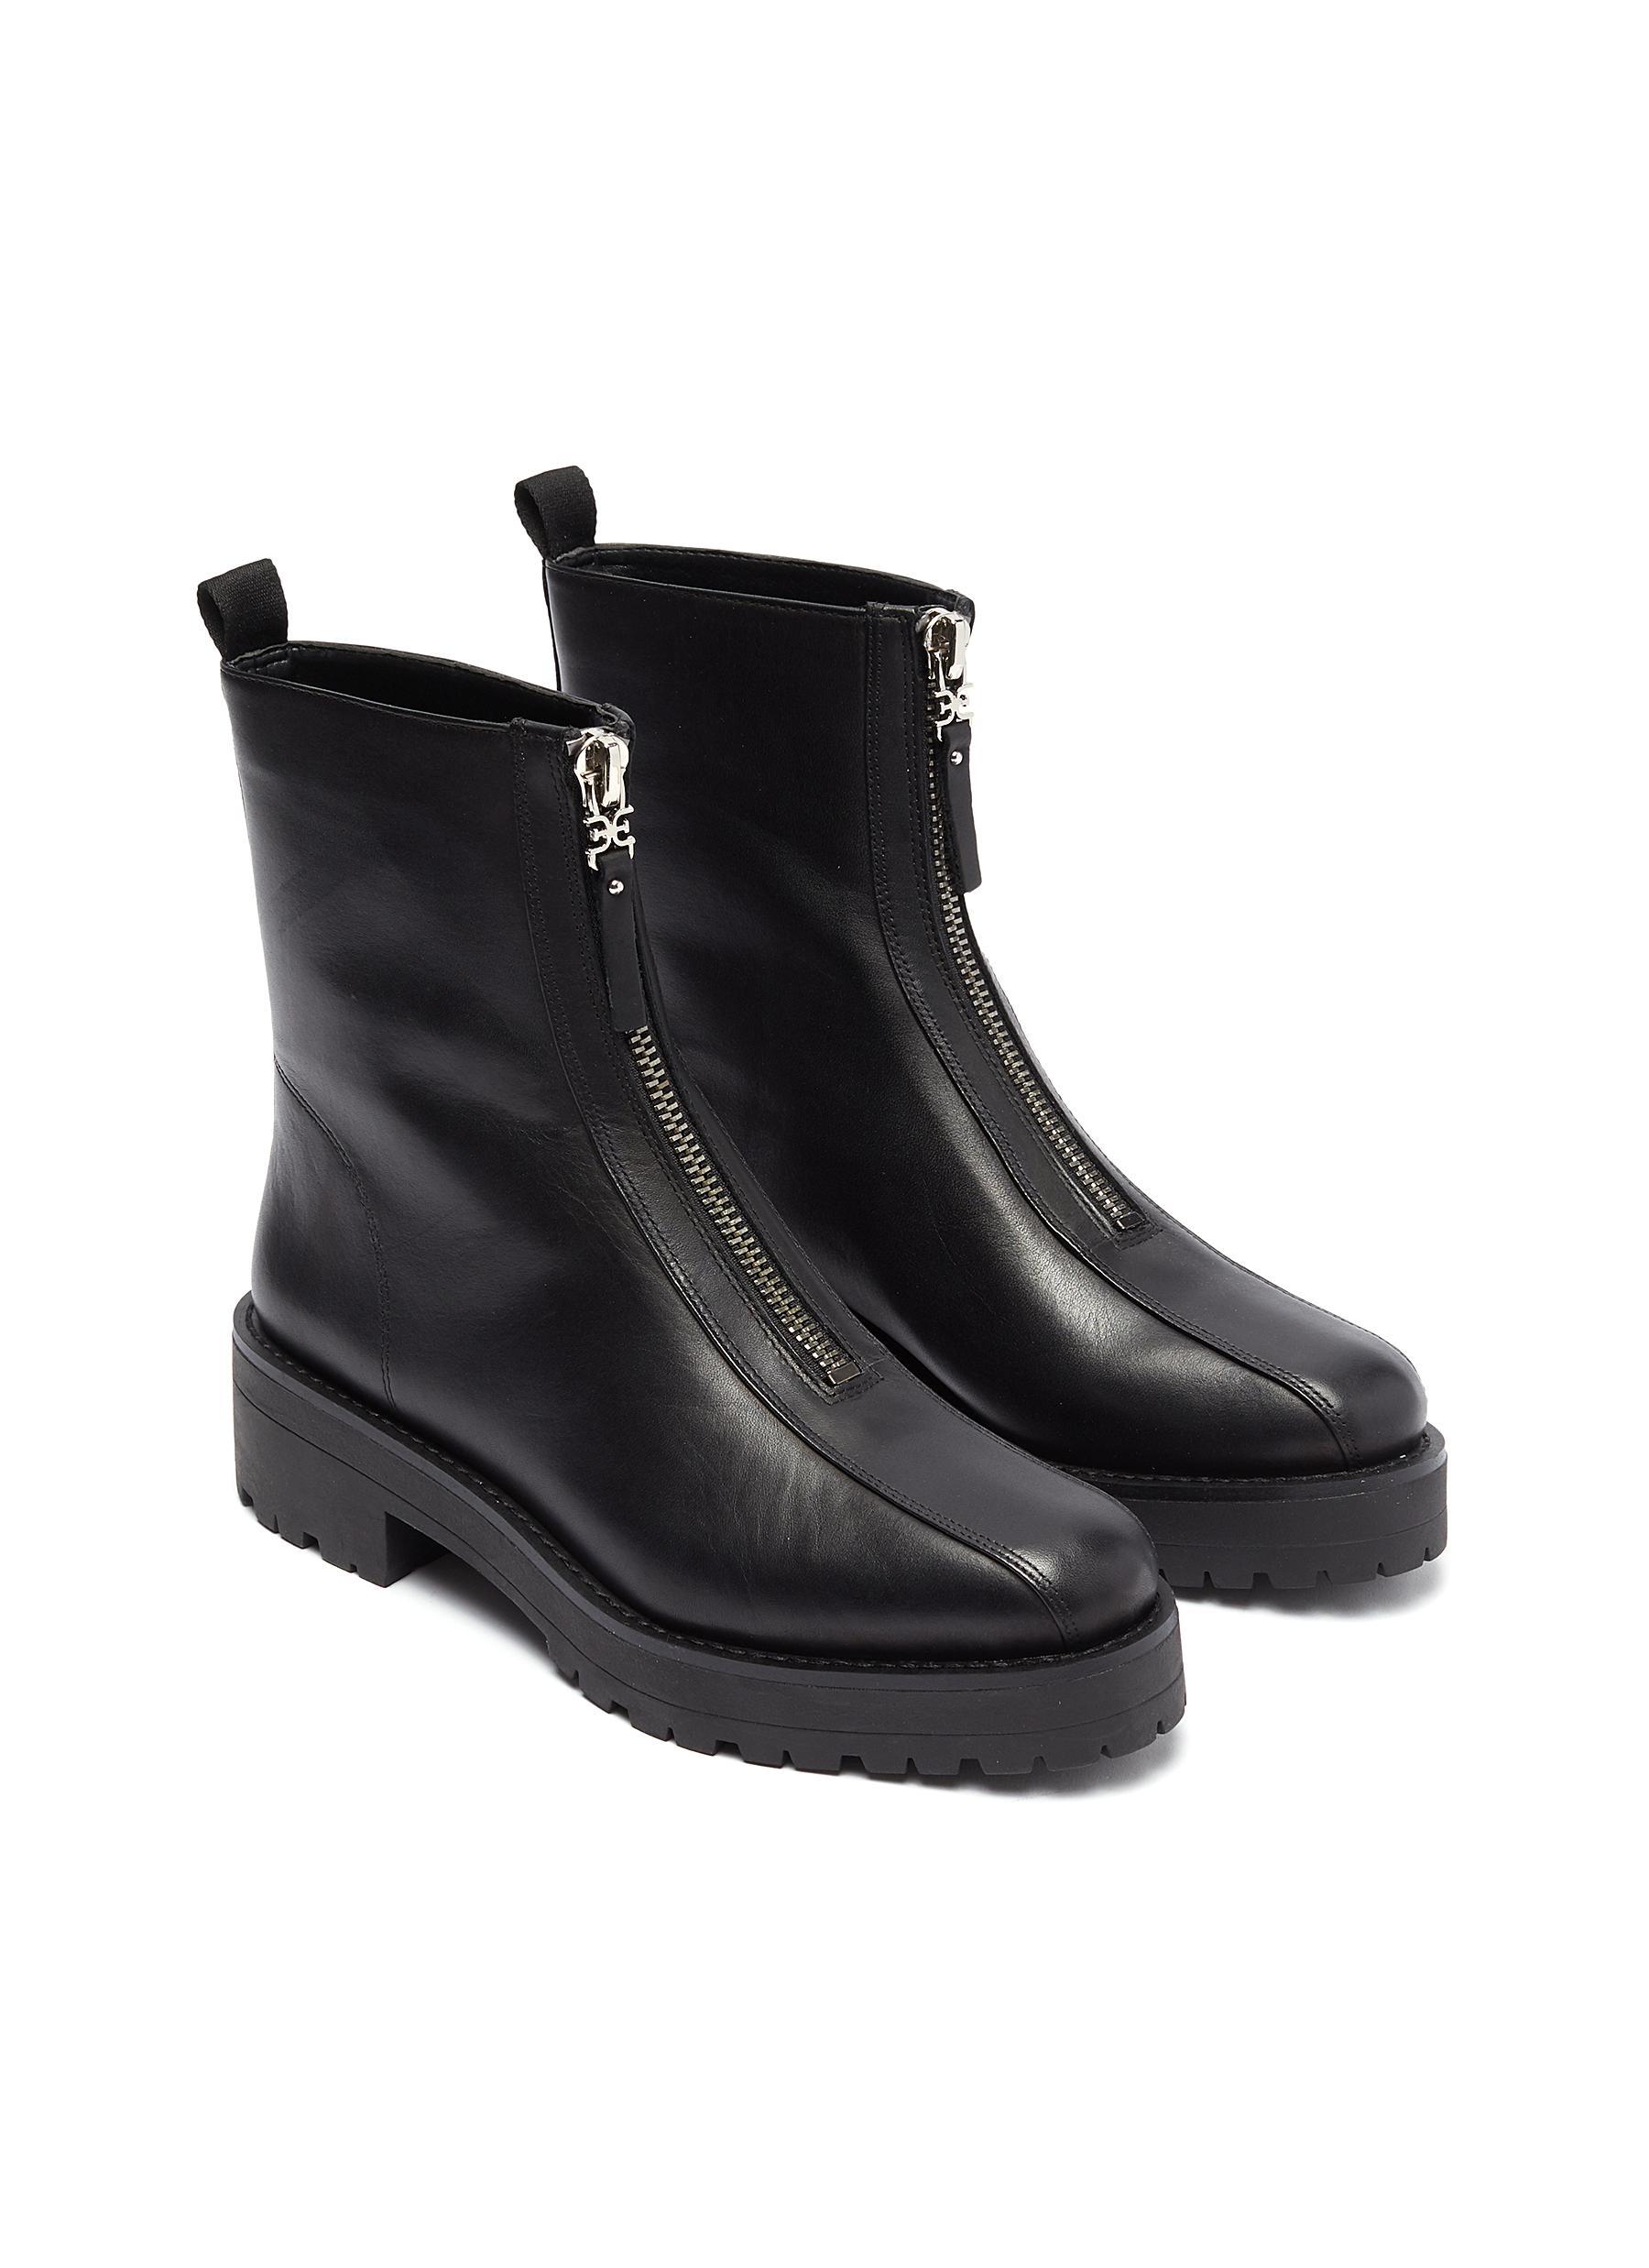 Sam Edelman 'jacquie' Zip Front Leather Combat Boots in Black | Lyst